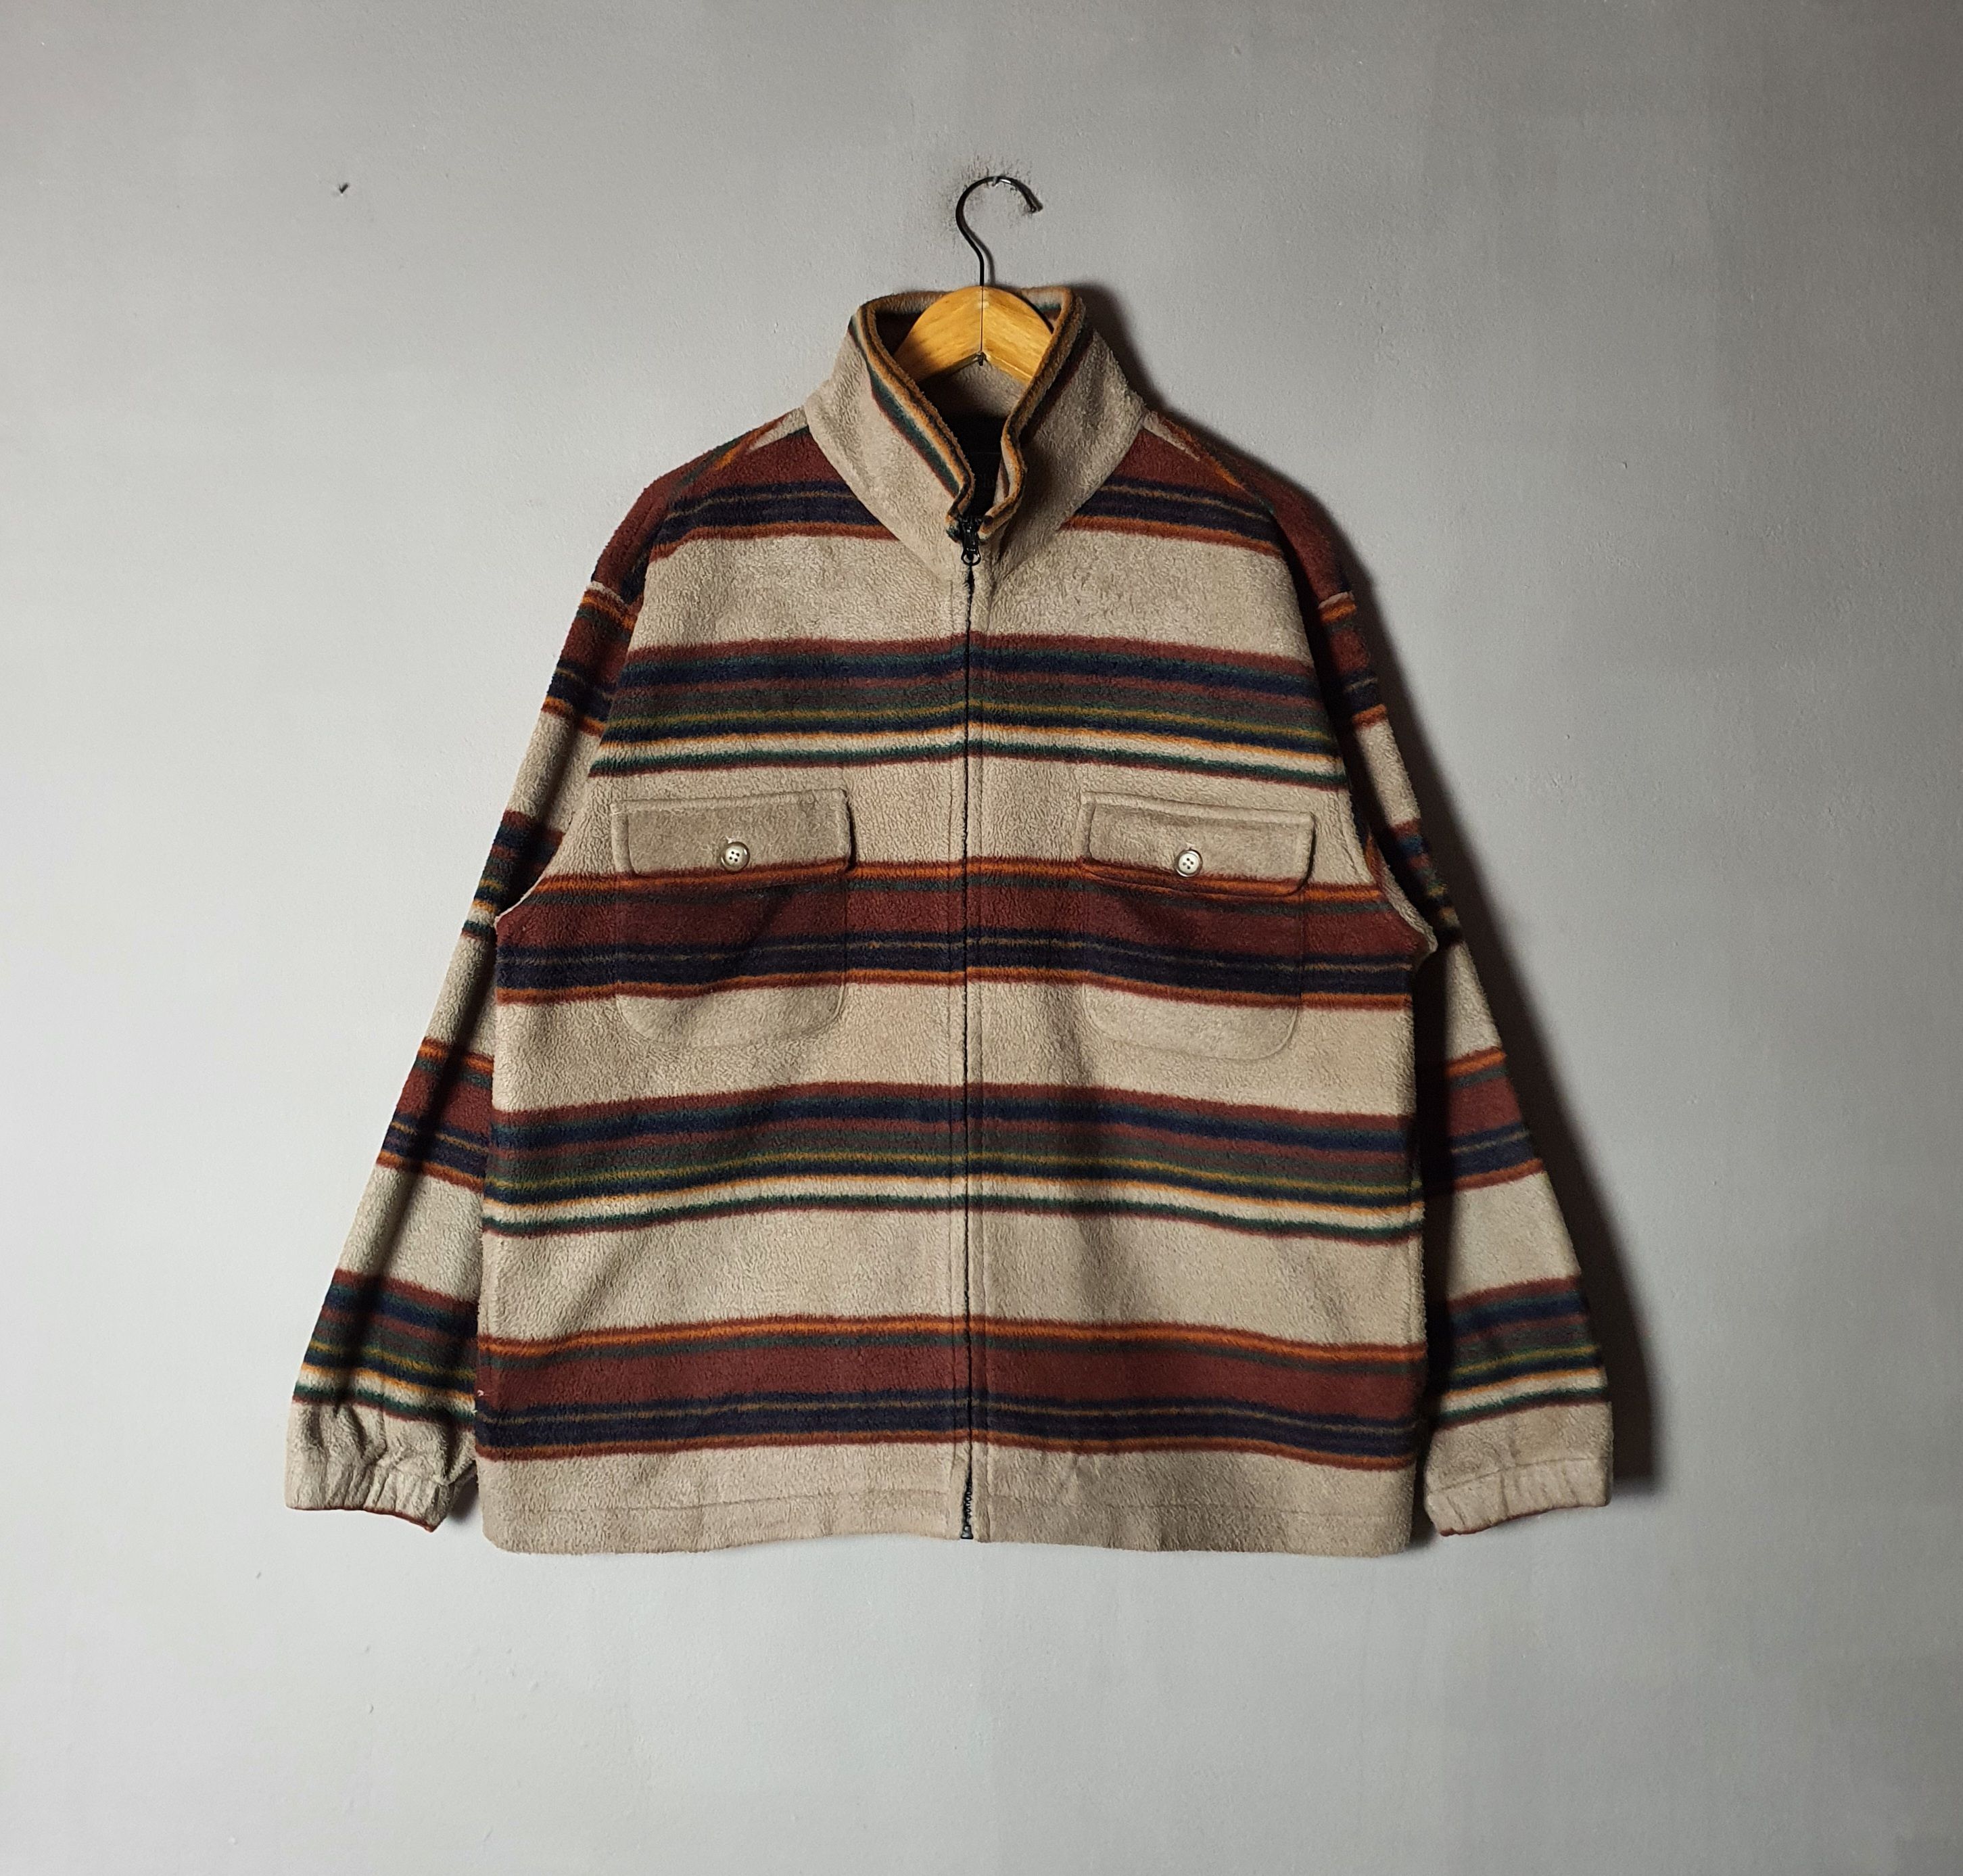 Vintage 90s Polo Club Fleece Zipper Striped Sweater Size Medium Size US M / EU 48-50 / 2 - 1 Preview